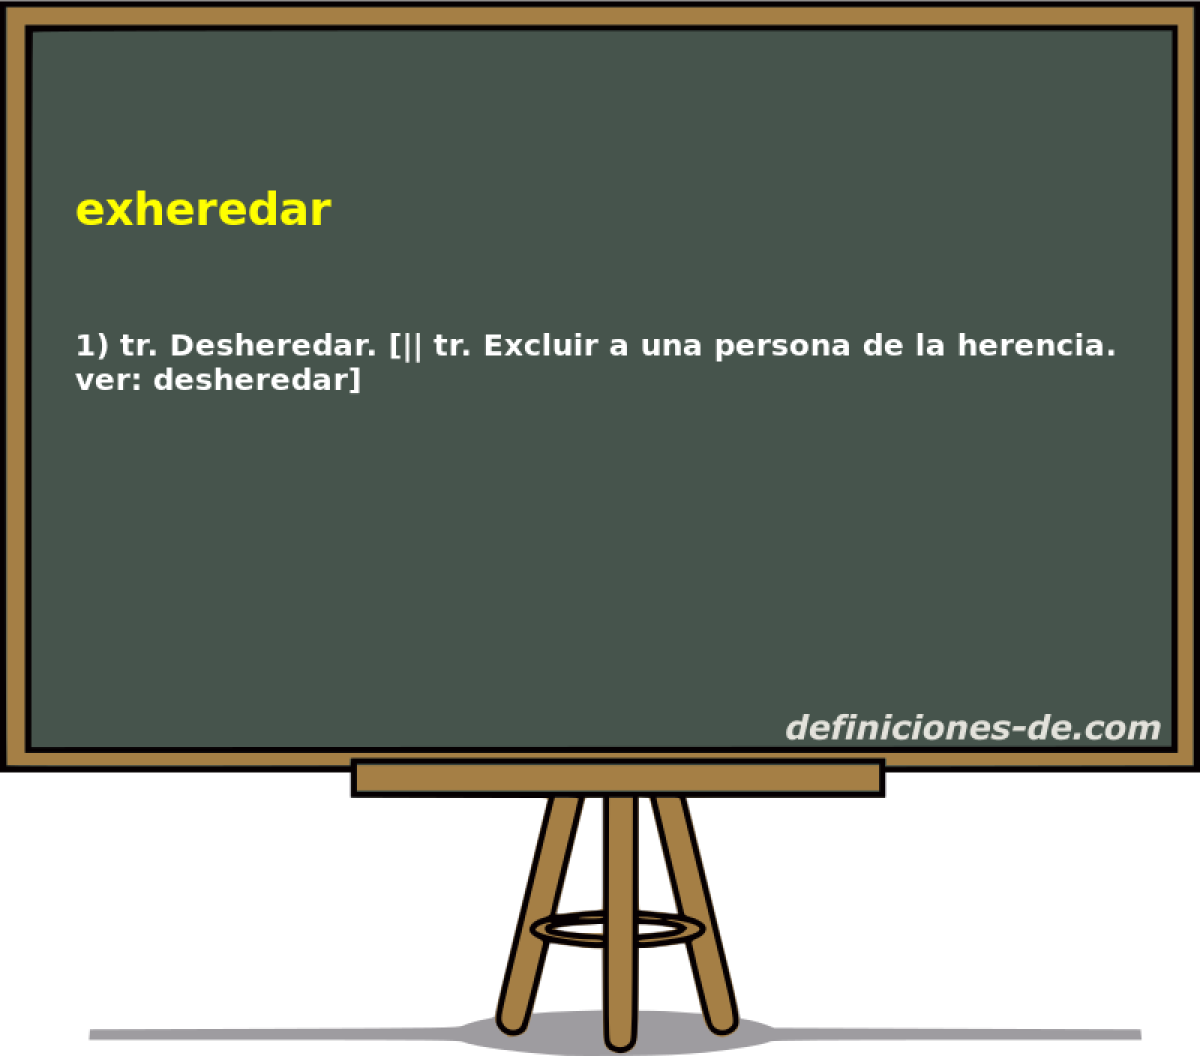 exheredar 